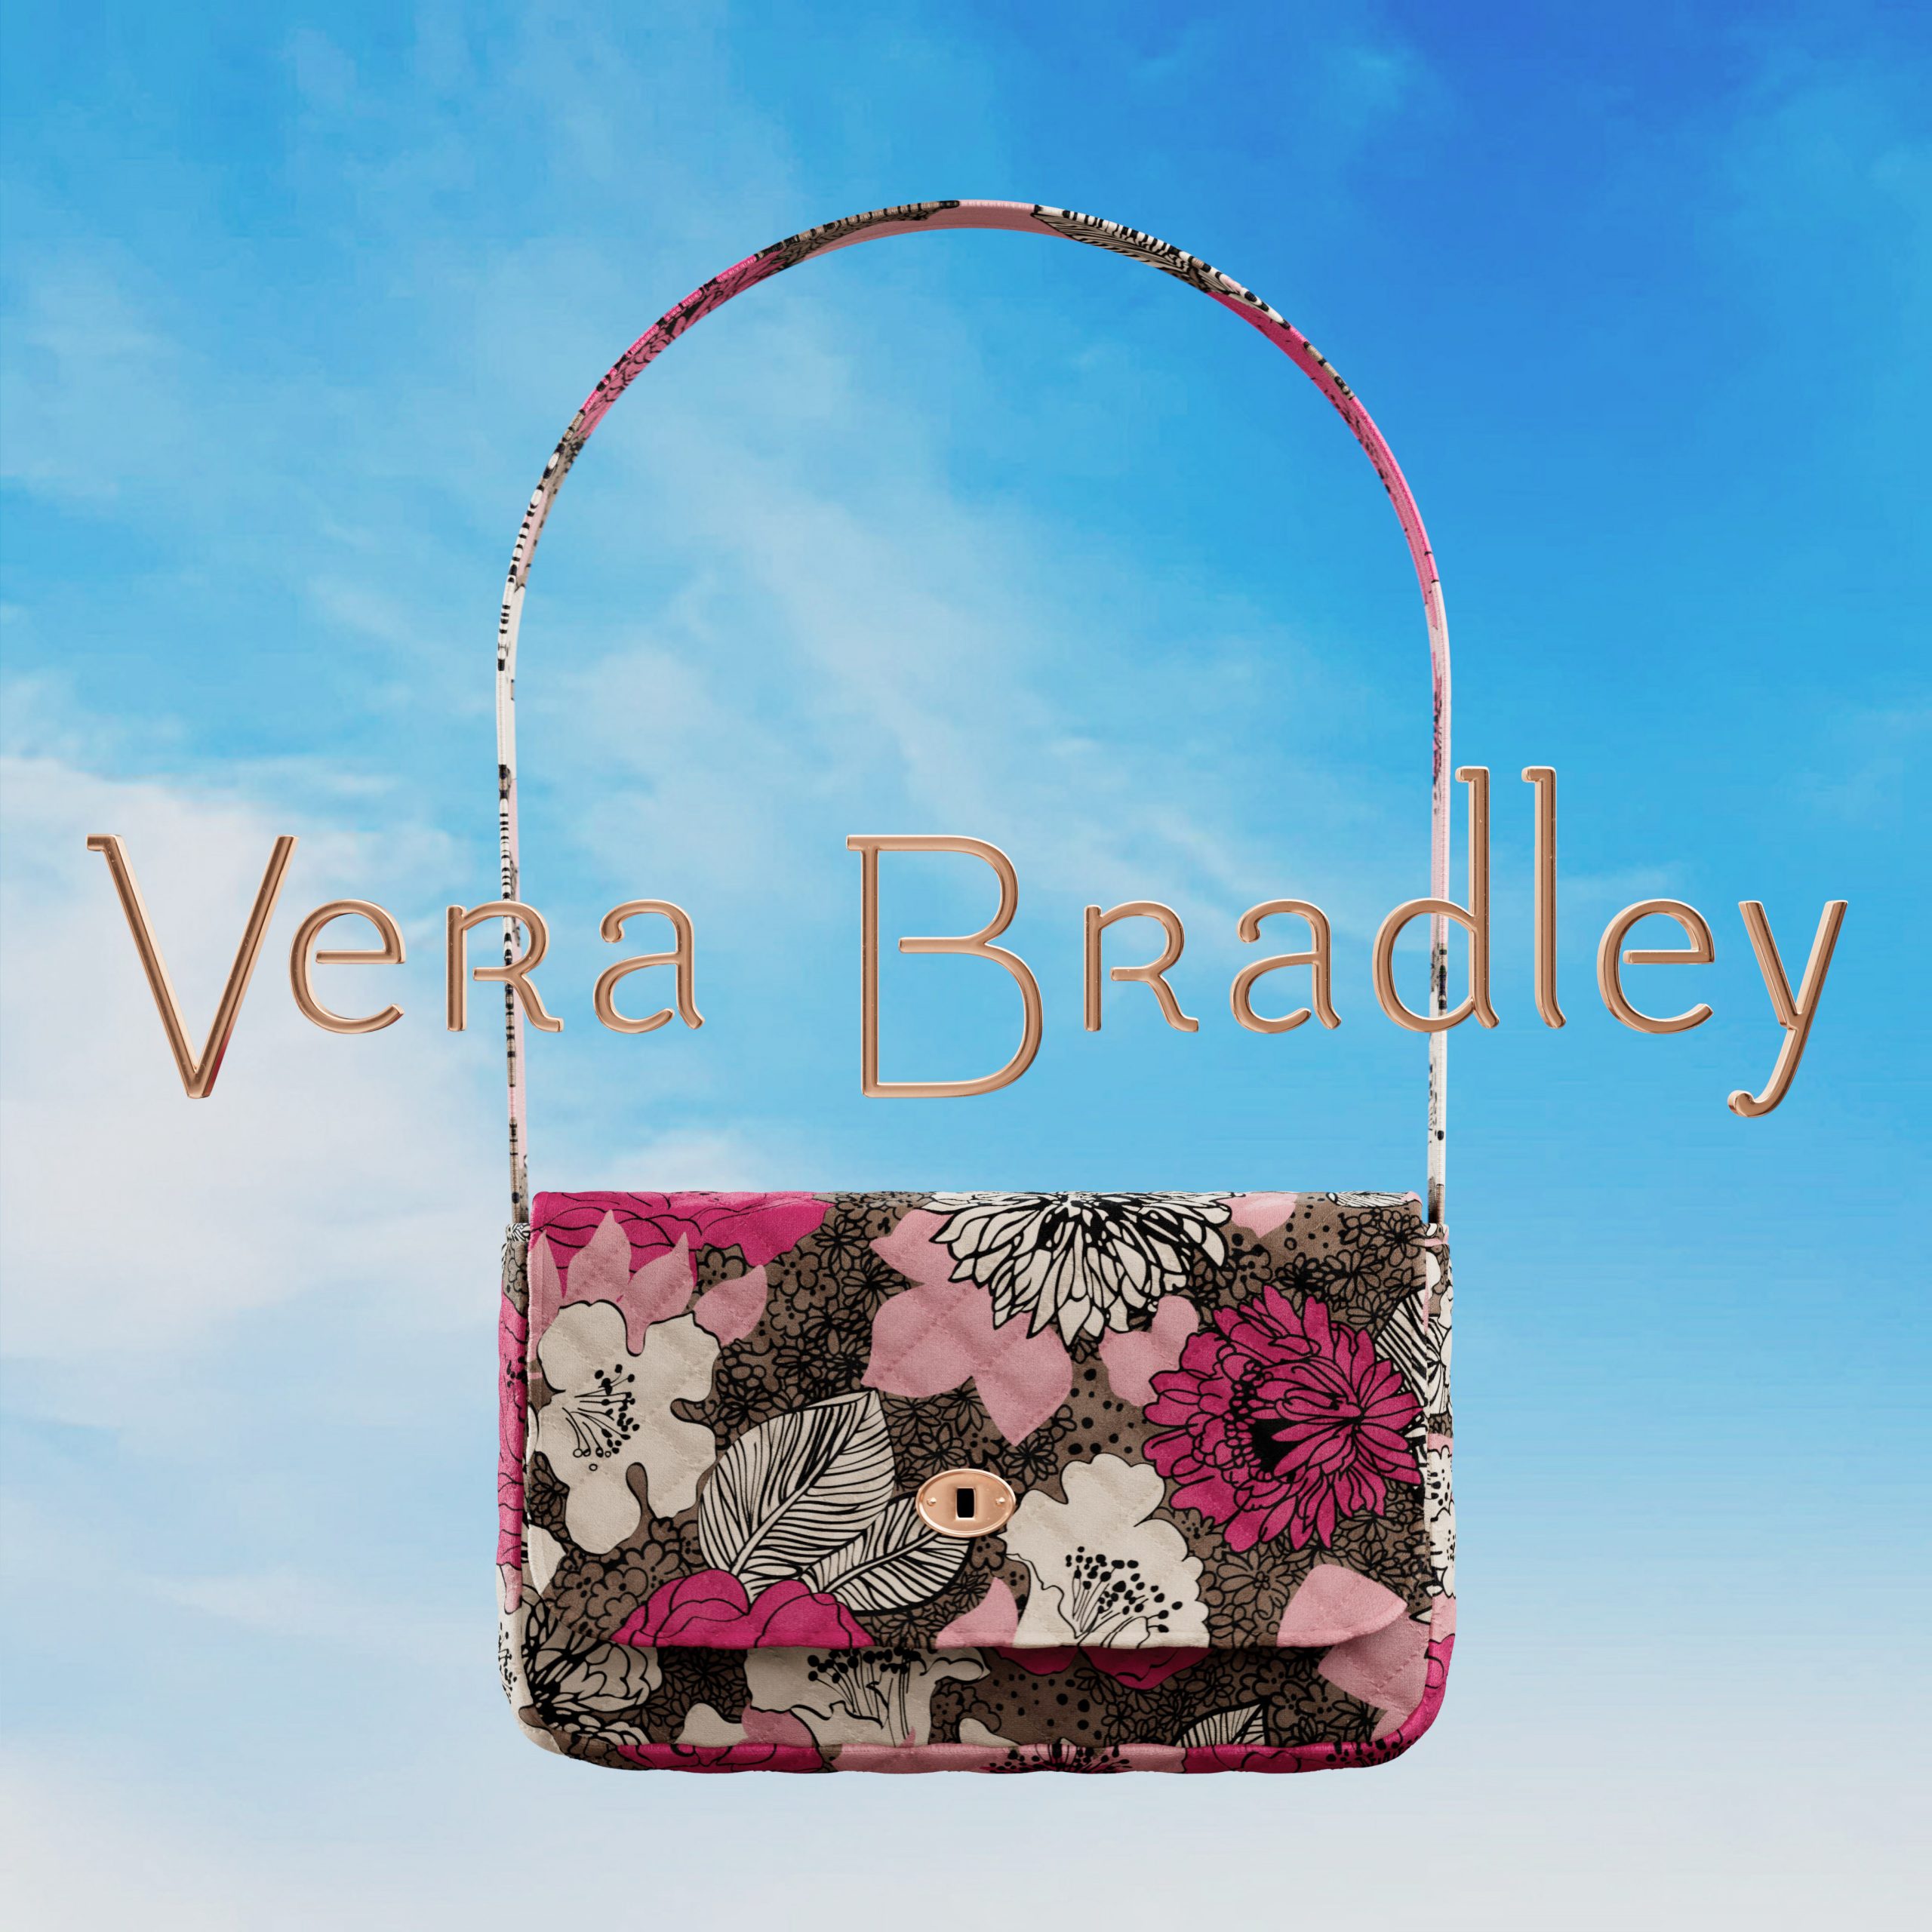 Vera Bradley handbag with blue background NFT